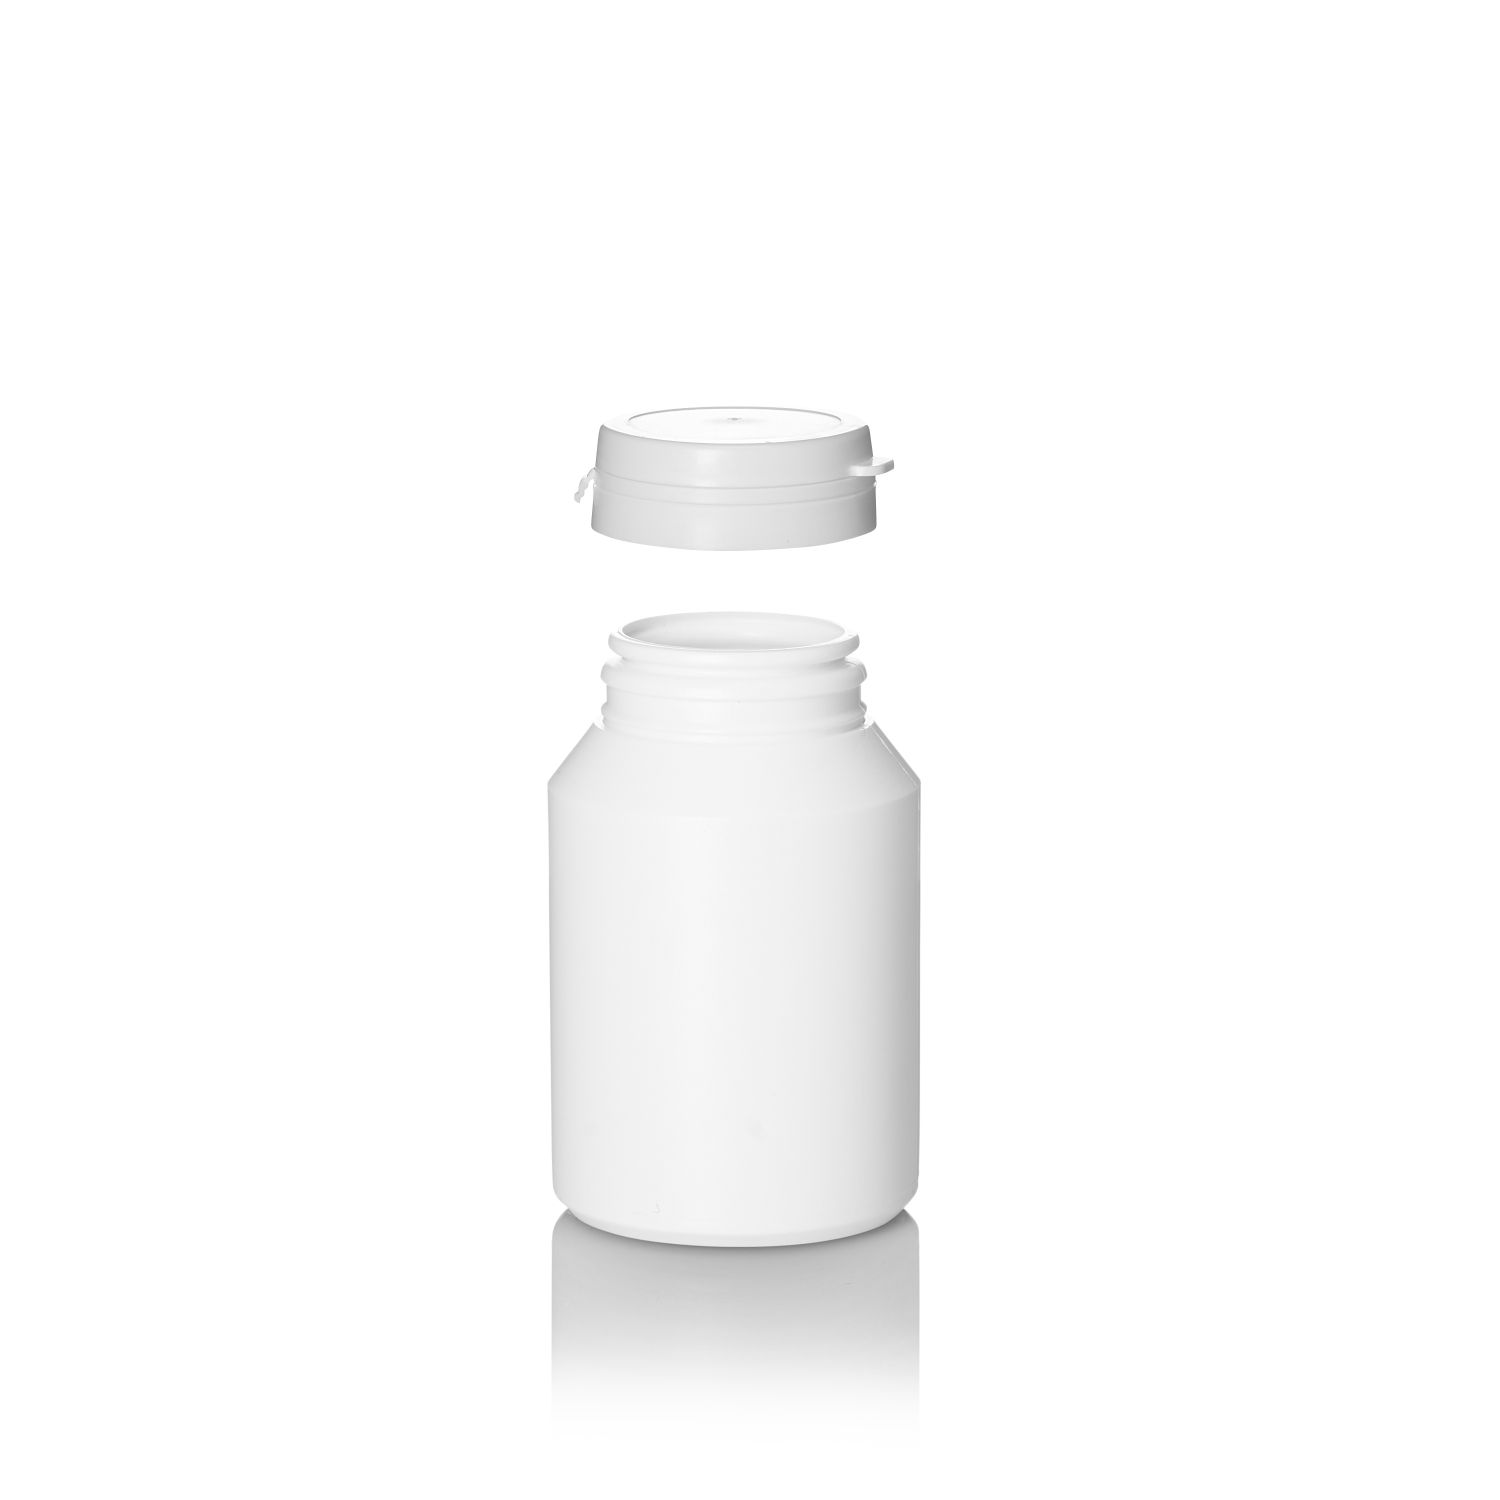 175ml White PP Tamper Evident Tampertainer Jar